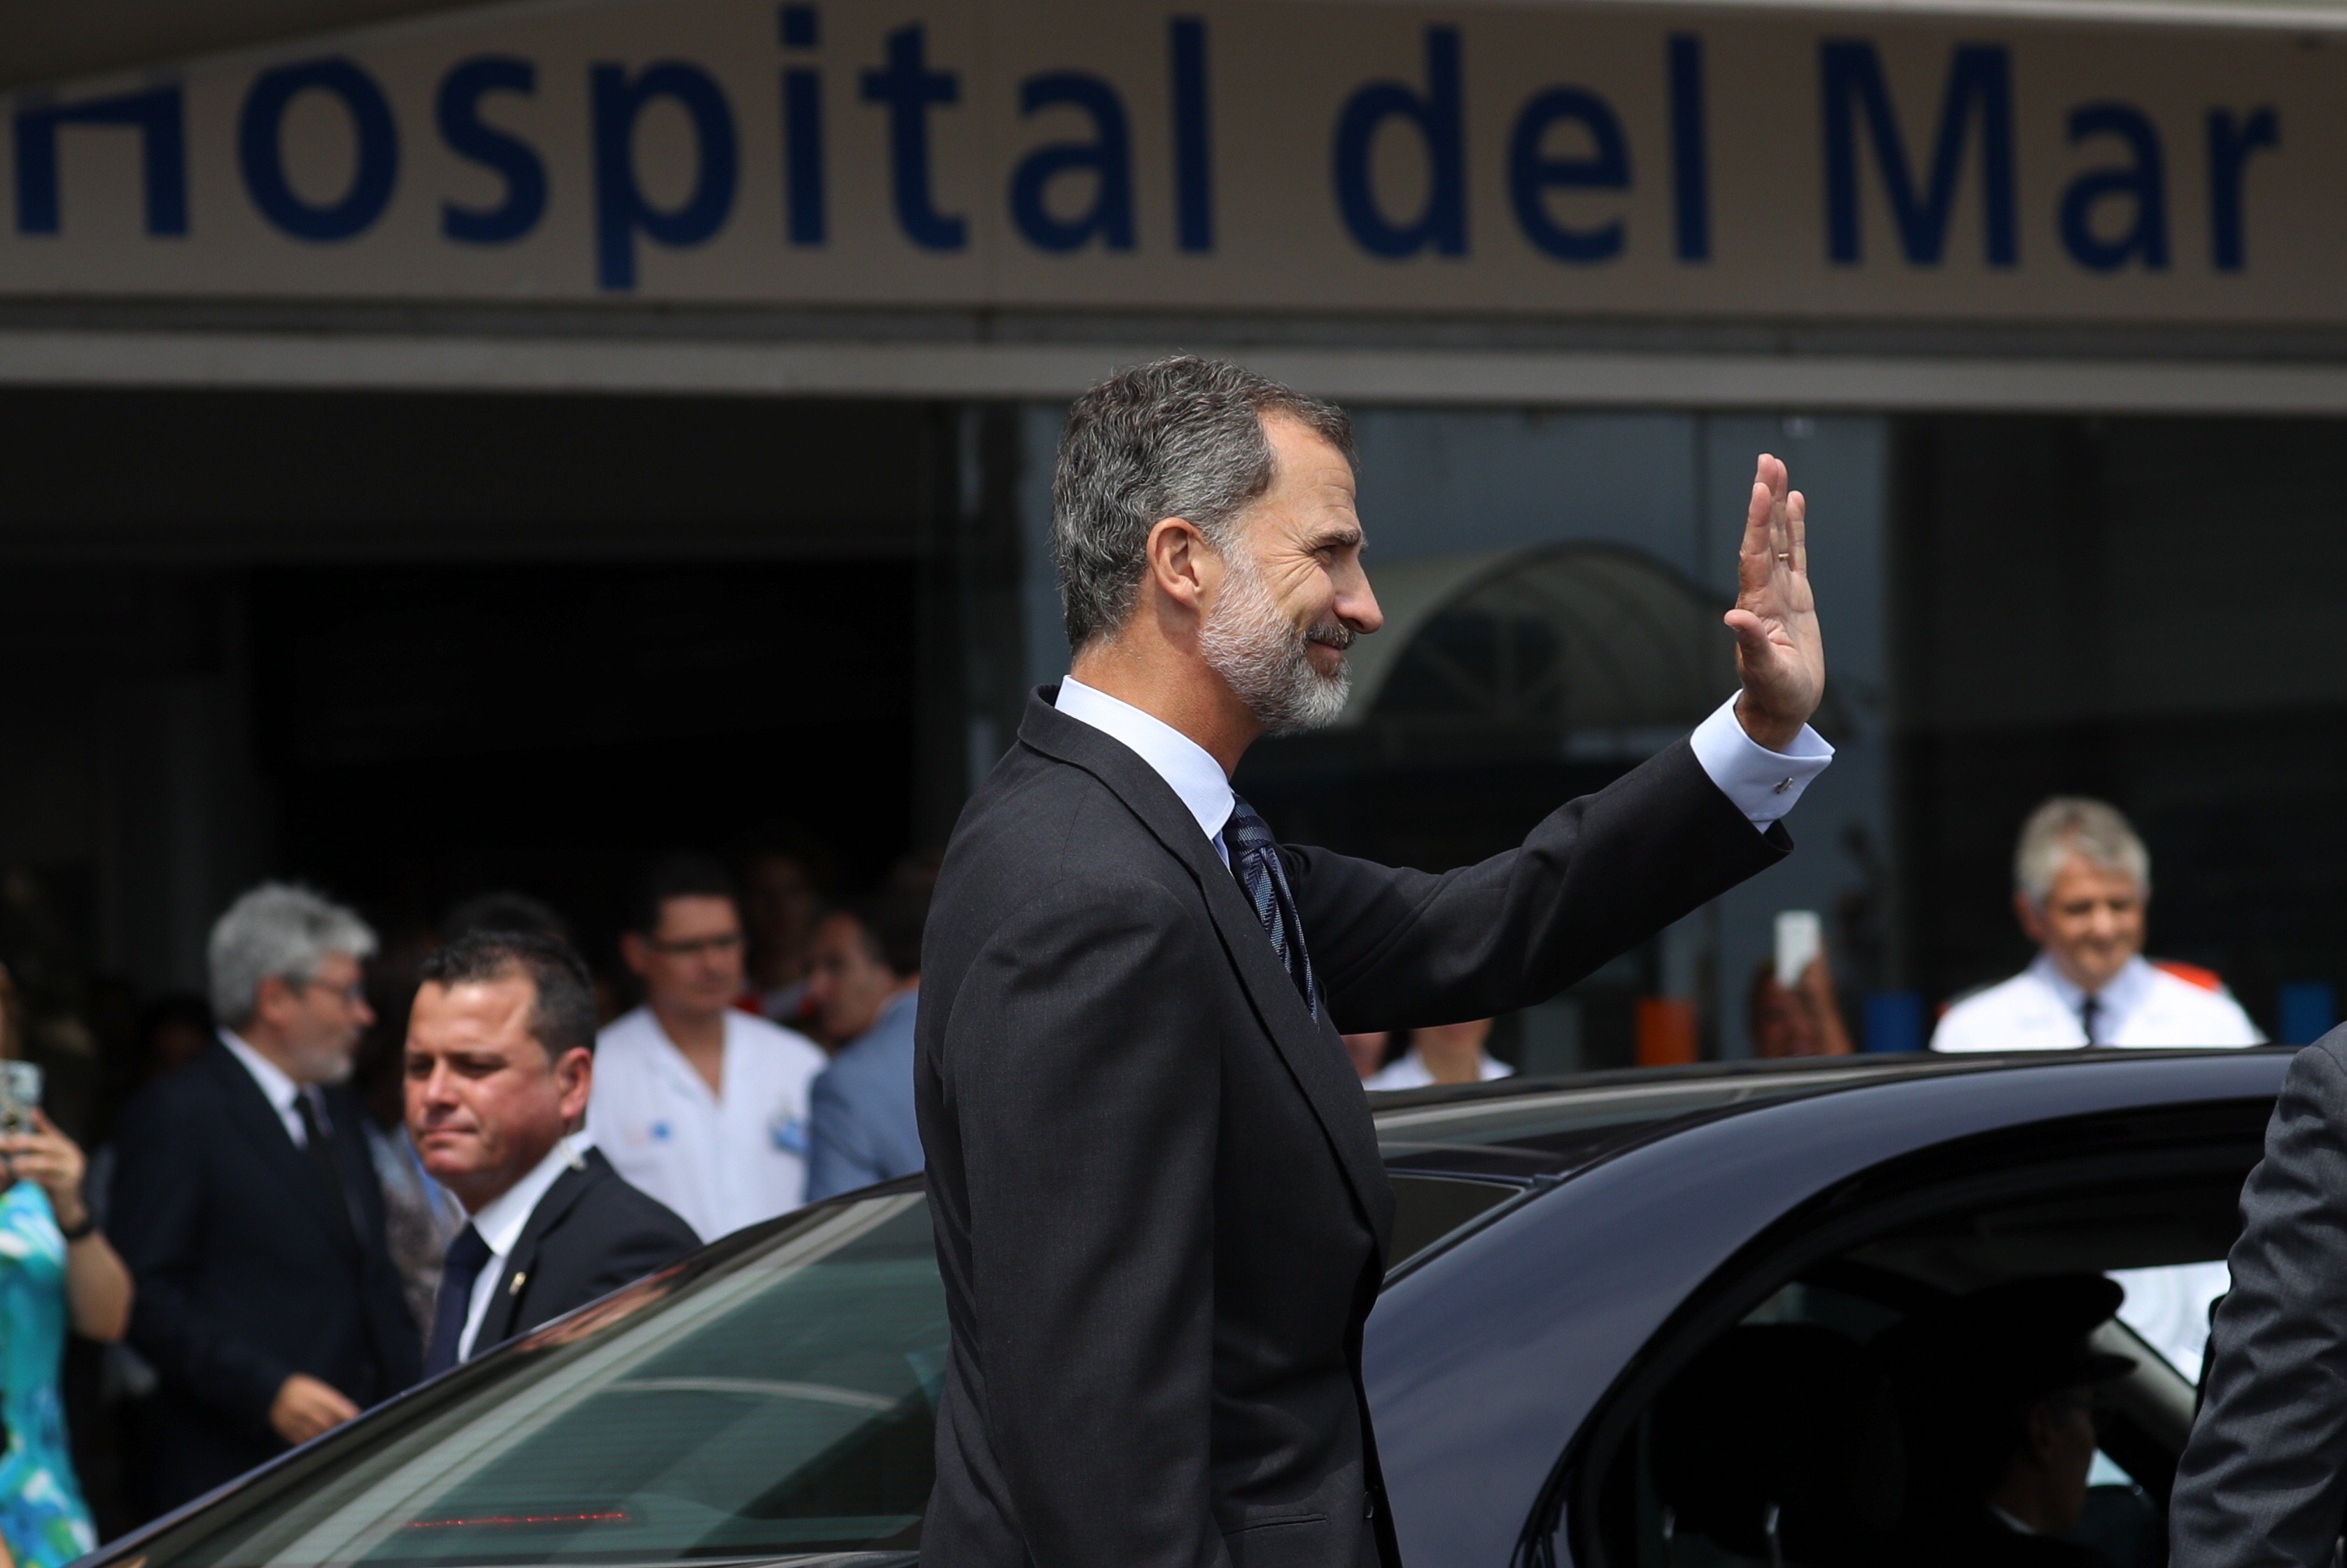 Un manifest acusa el Govern espanyol i la monarquia de "promoure guerres"